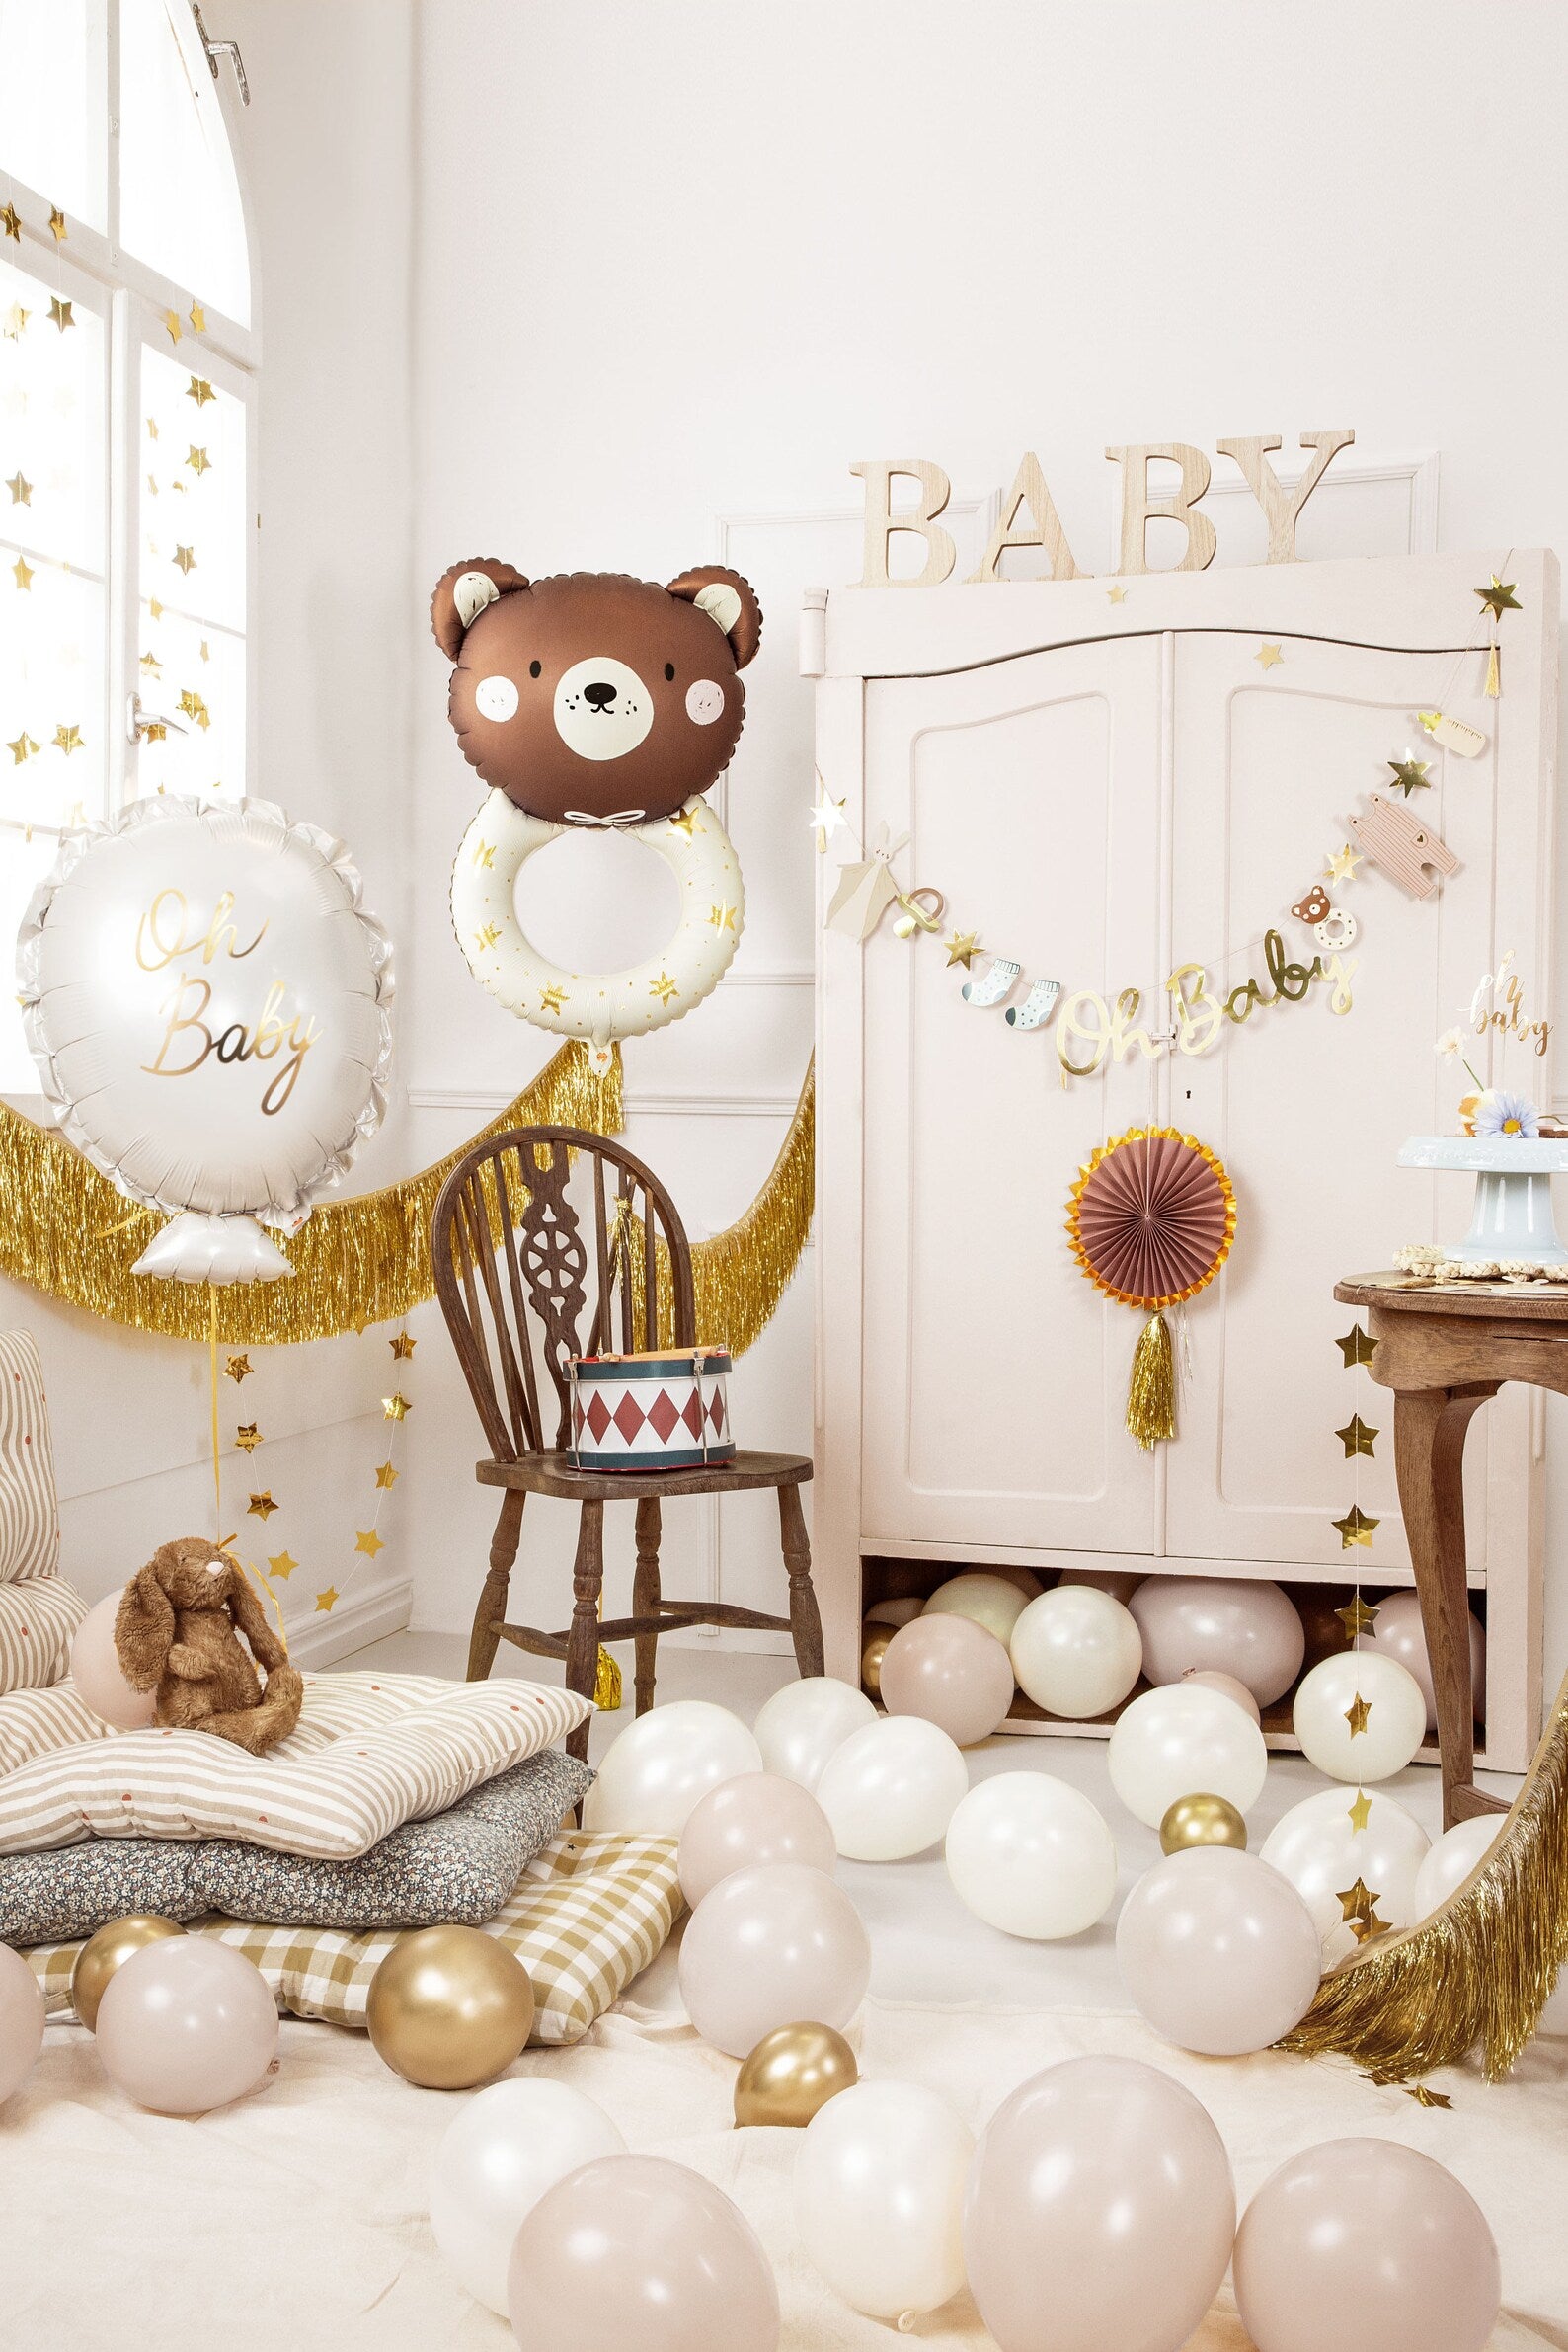 Baby Bear Rattle Balloon - Muddy Boots Home UK